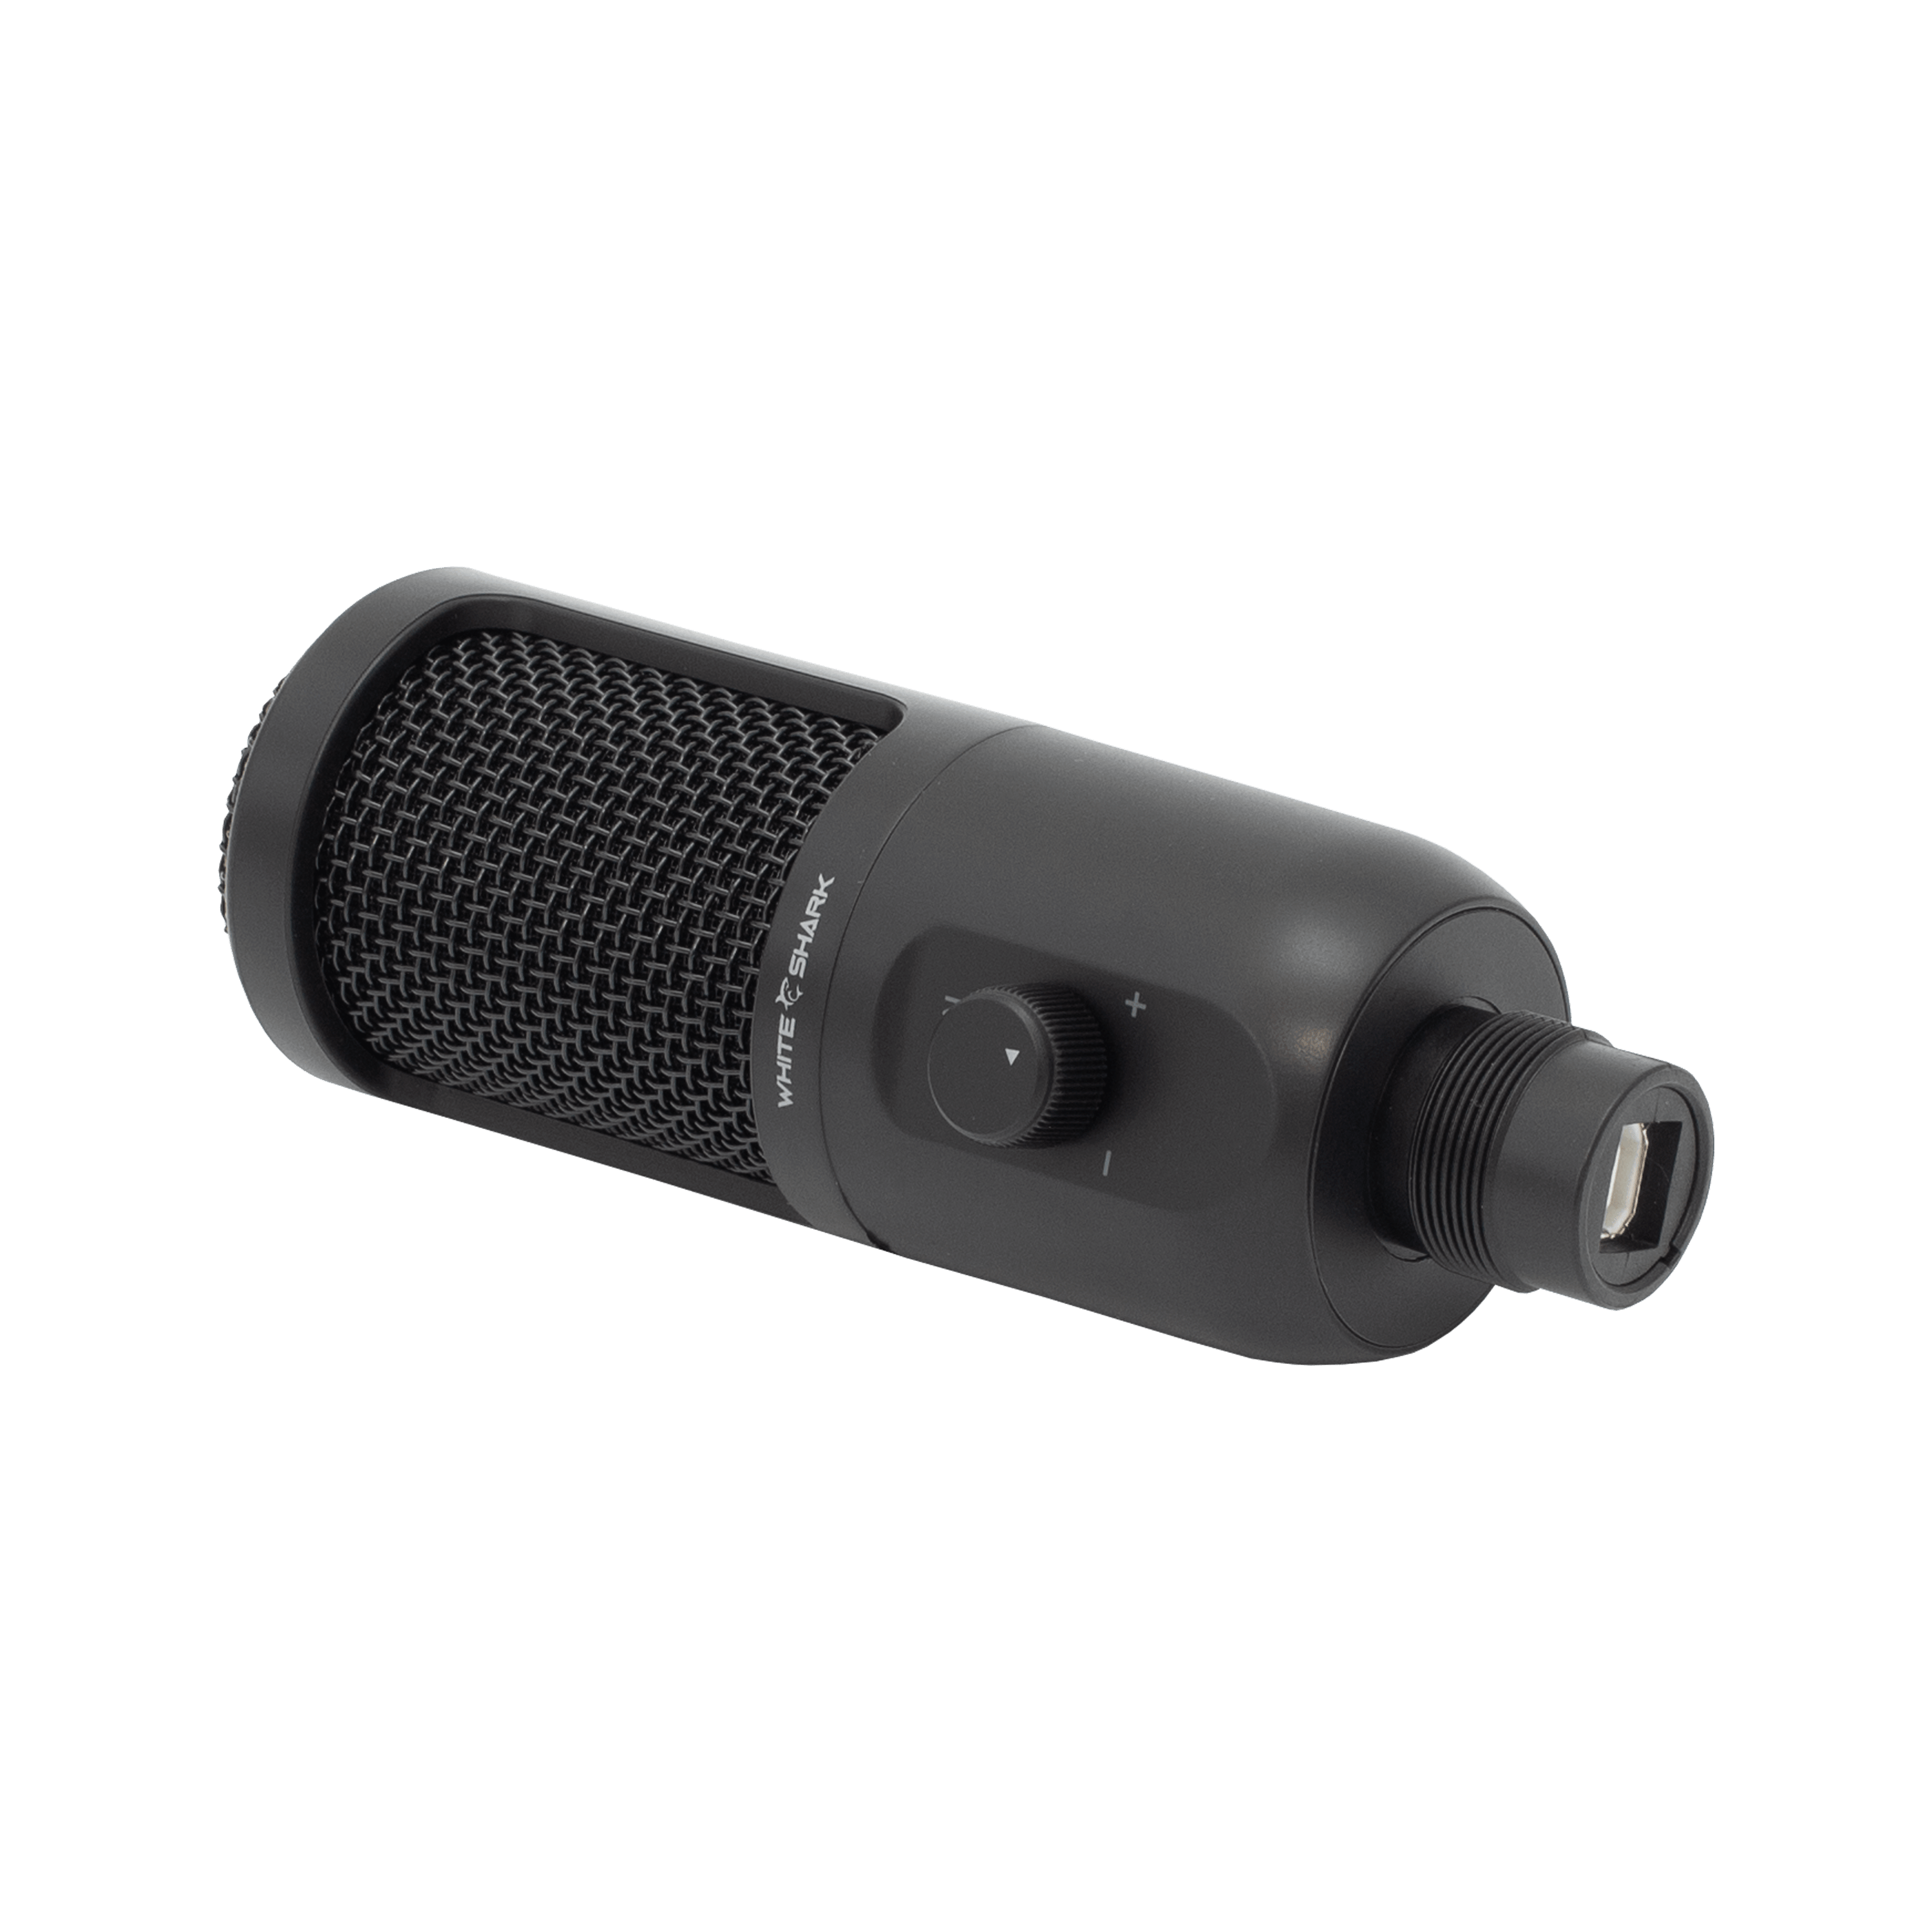 White Shark TAUS Podcasting Microphone Kit - Black - GameStore.mt | Powered by Flutisat